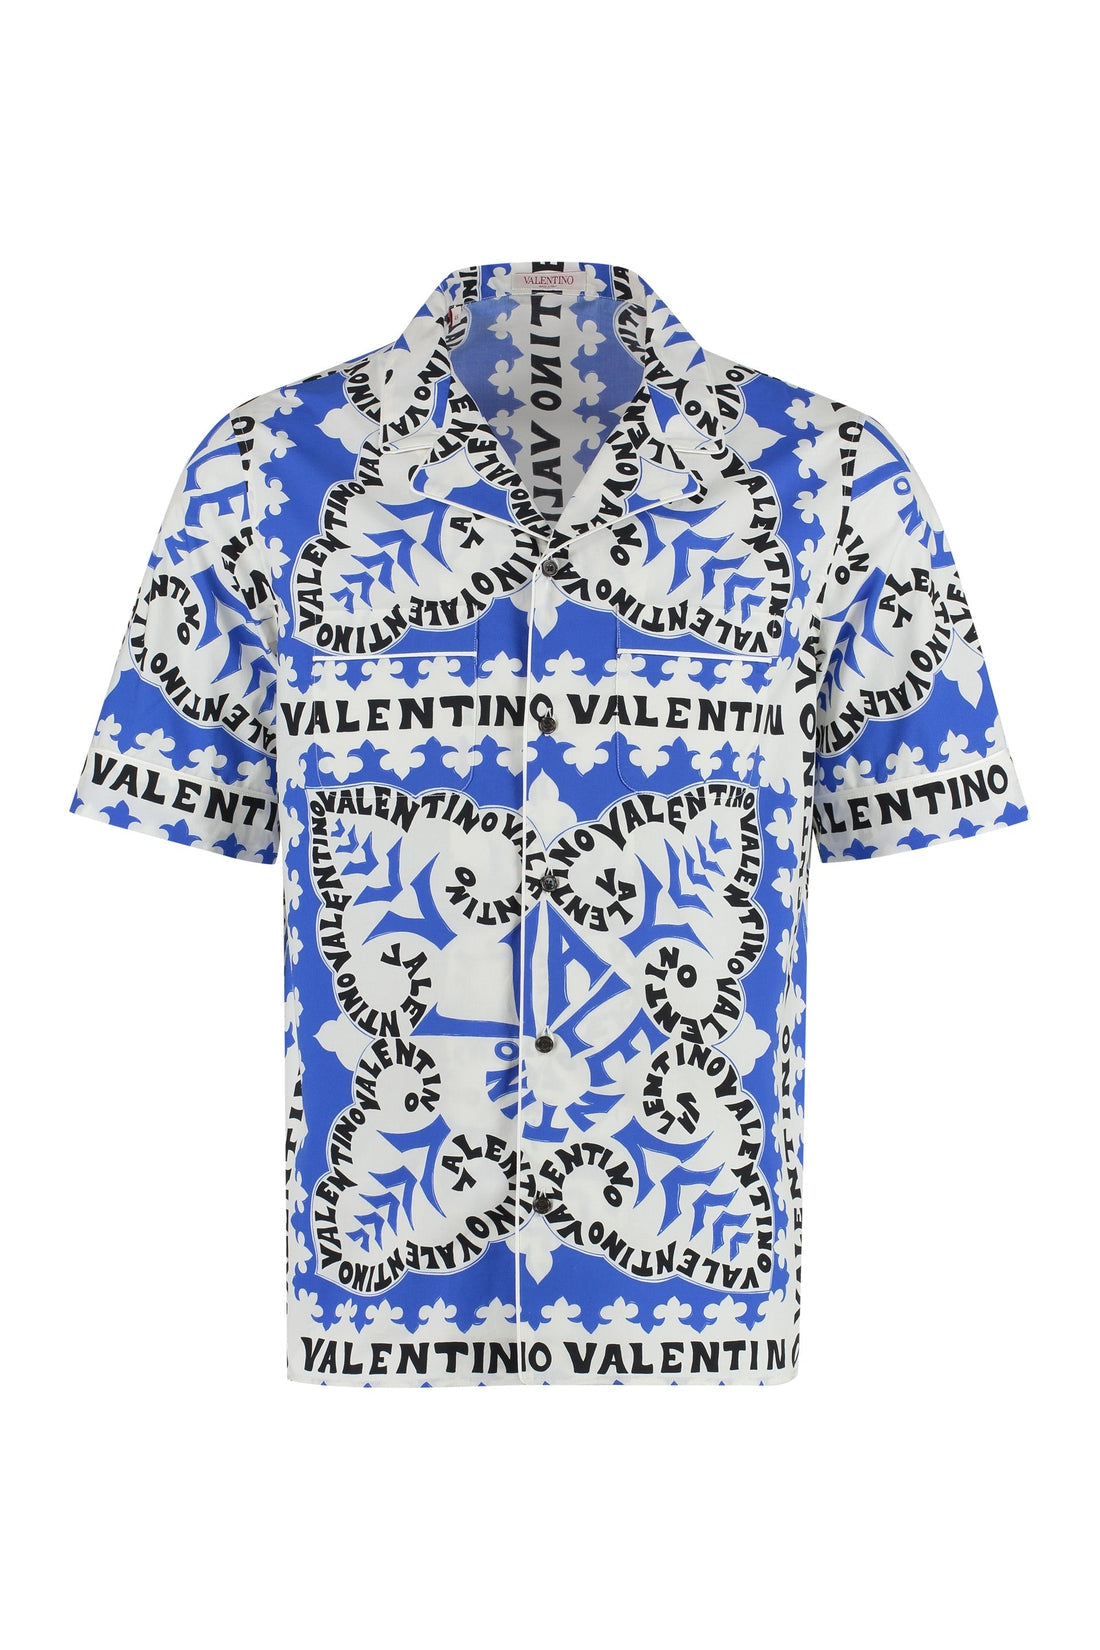 Valentino-OUTLET-SALE-Printed cotton shirt-ARCHIVIST